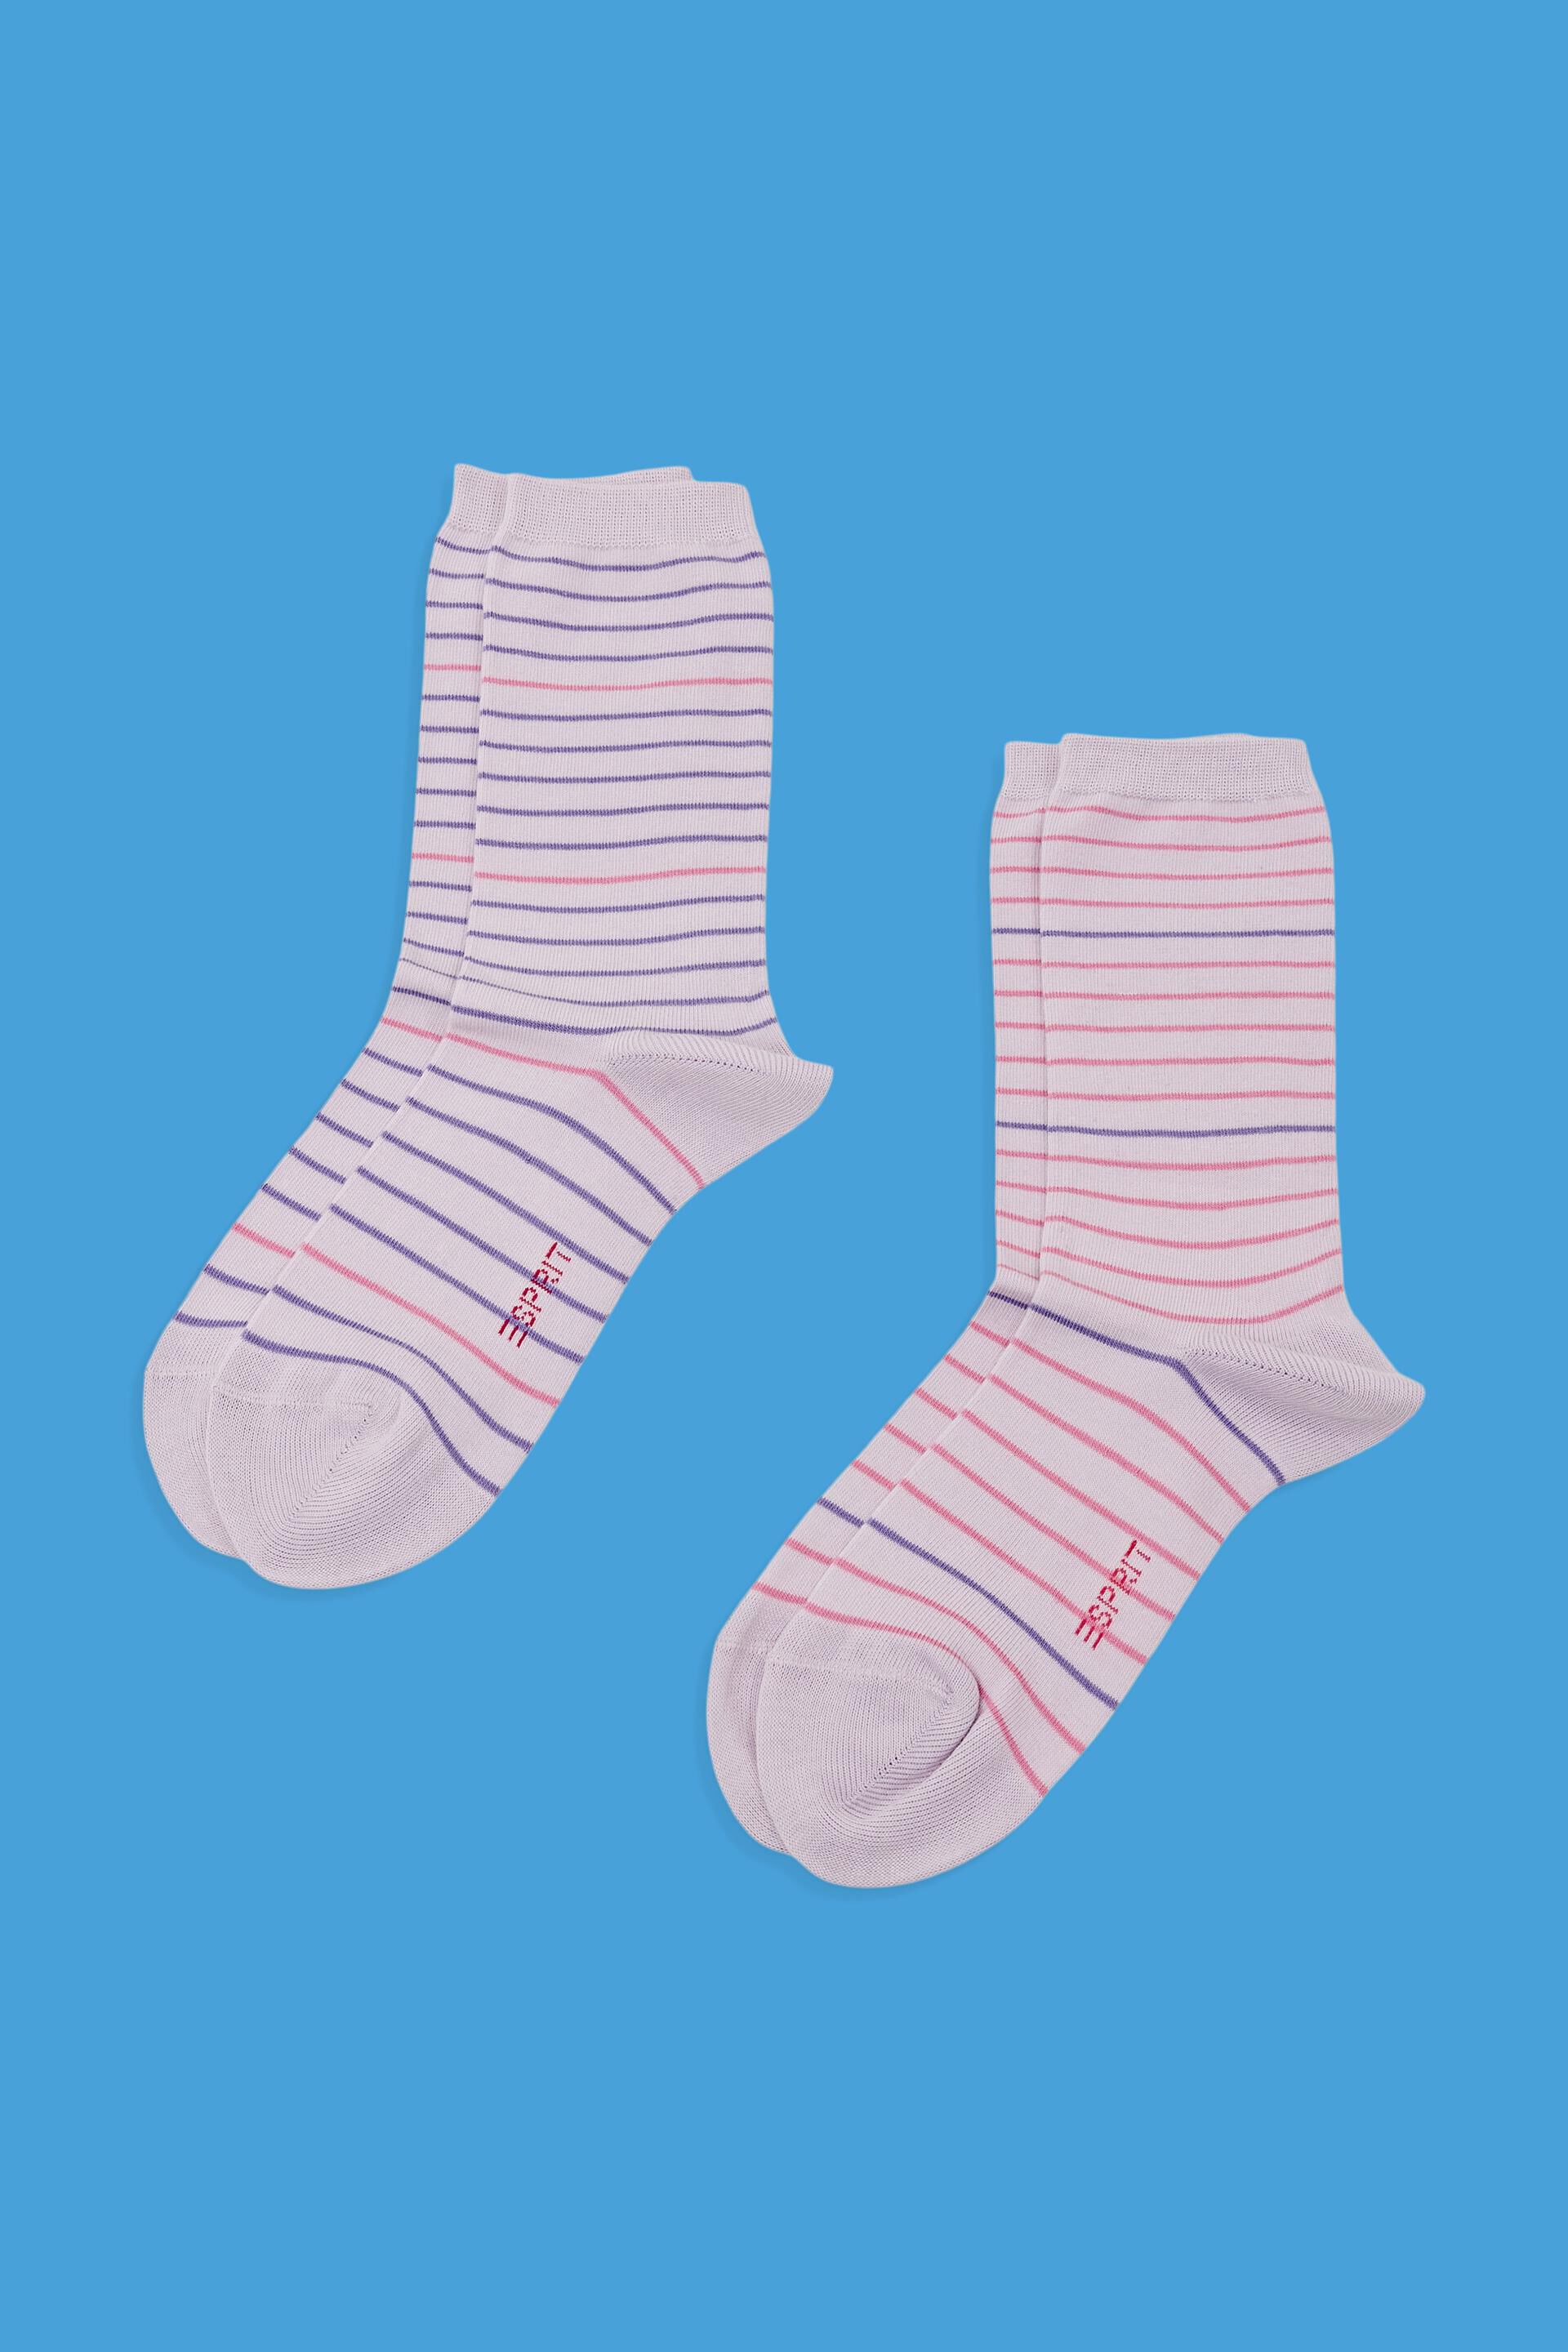 Esprit cotton striped socks, organic of 2-pack